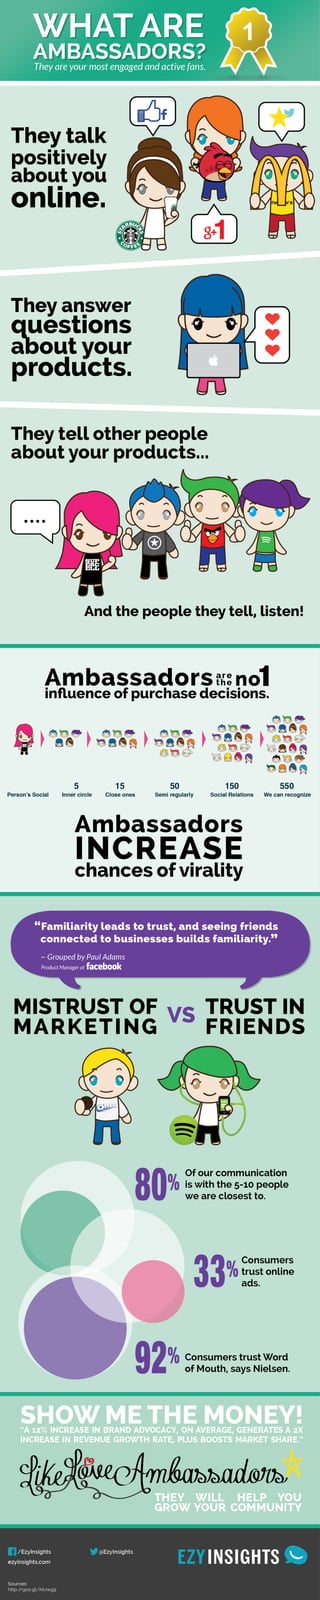 Social Media Ambassadors - Infographic